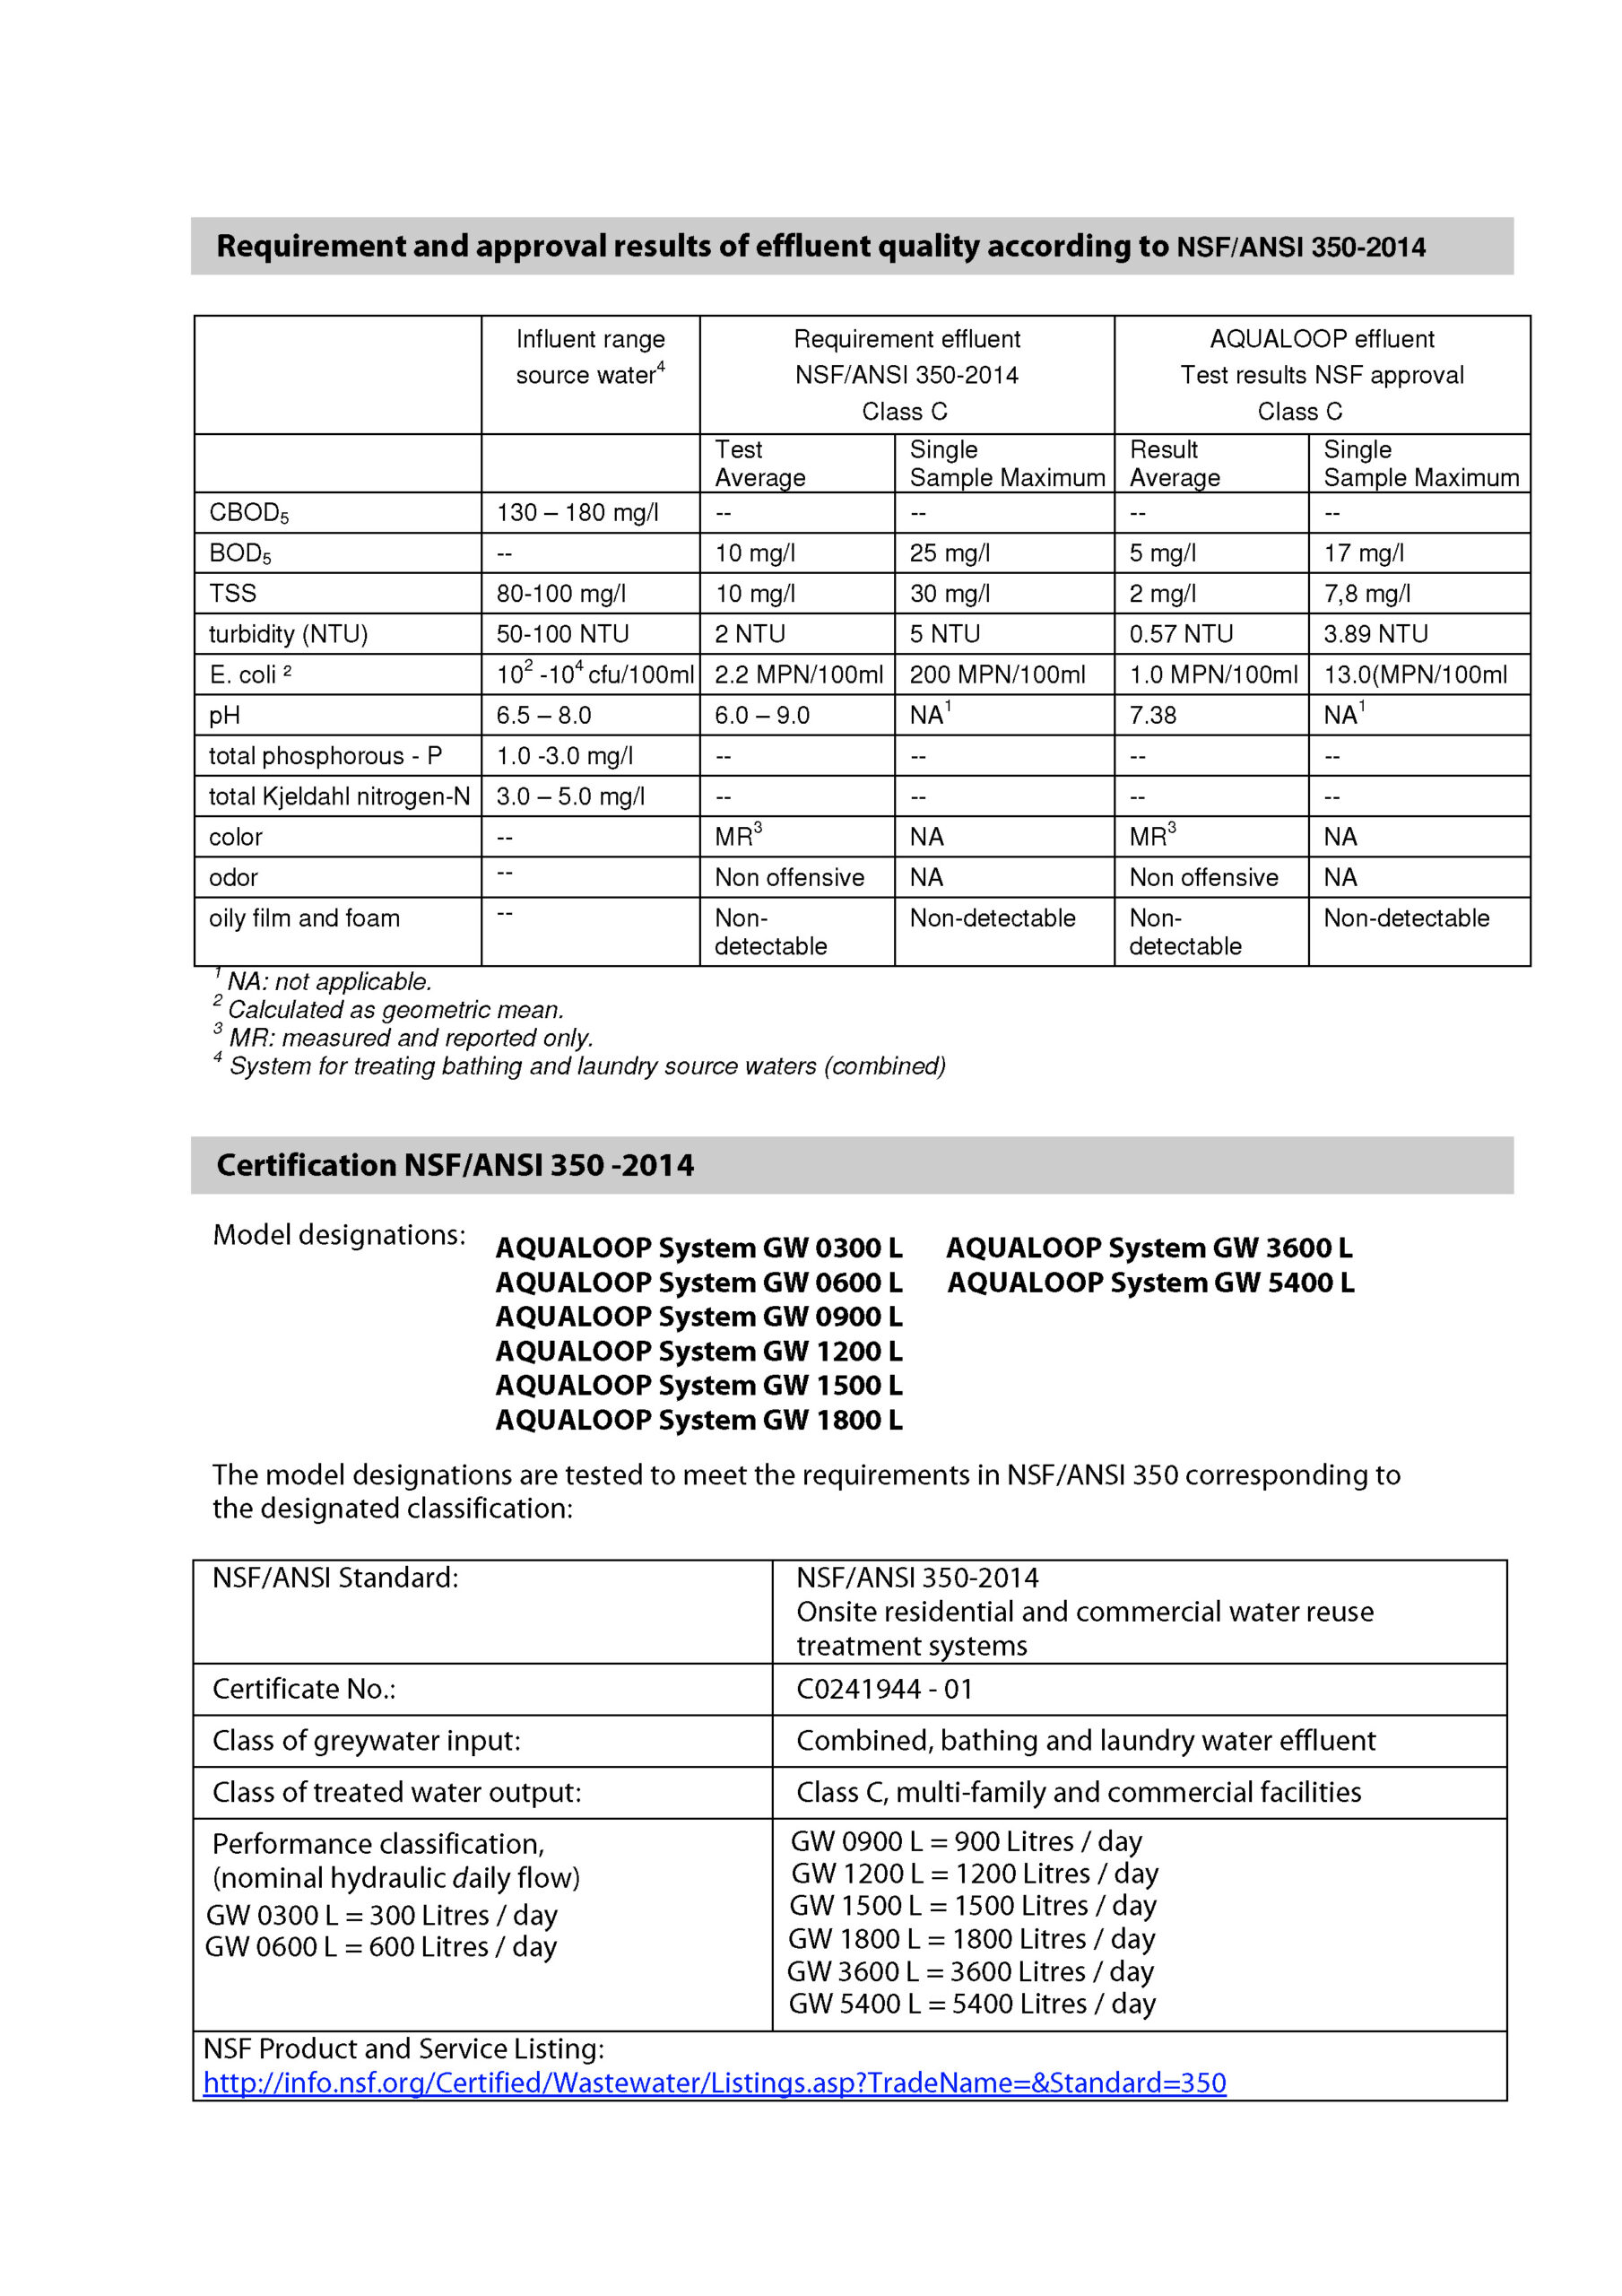 AQUALOOP NSF 350 Certificate and Data Summary Ecovie_Page_2